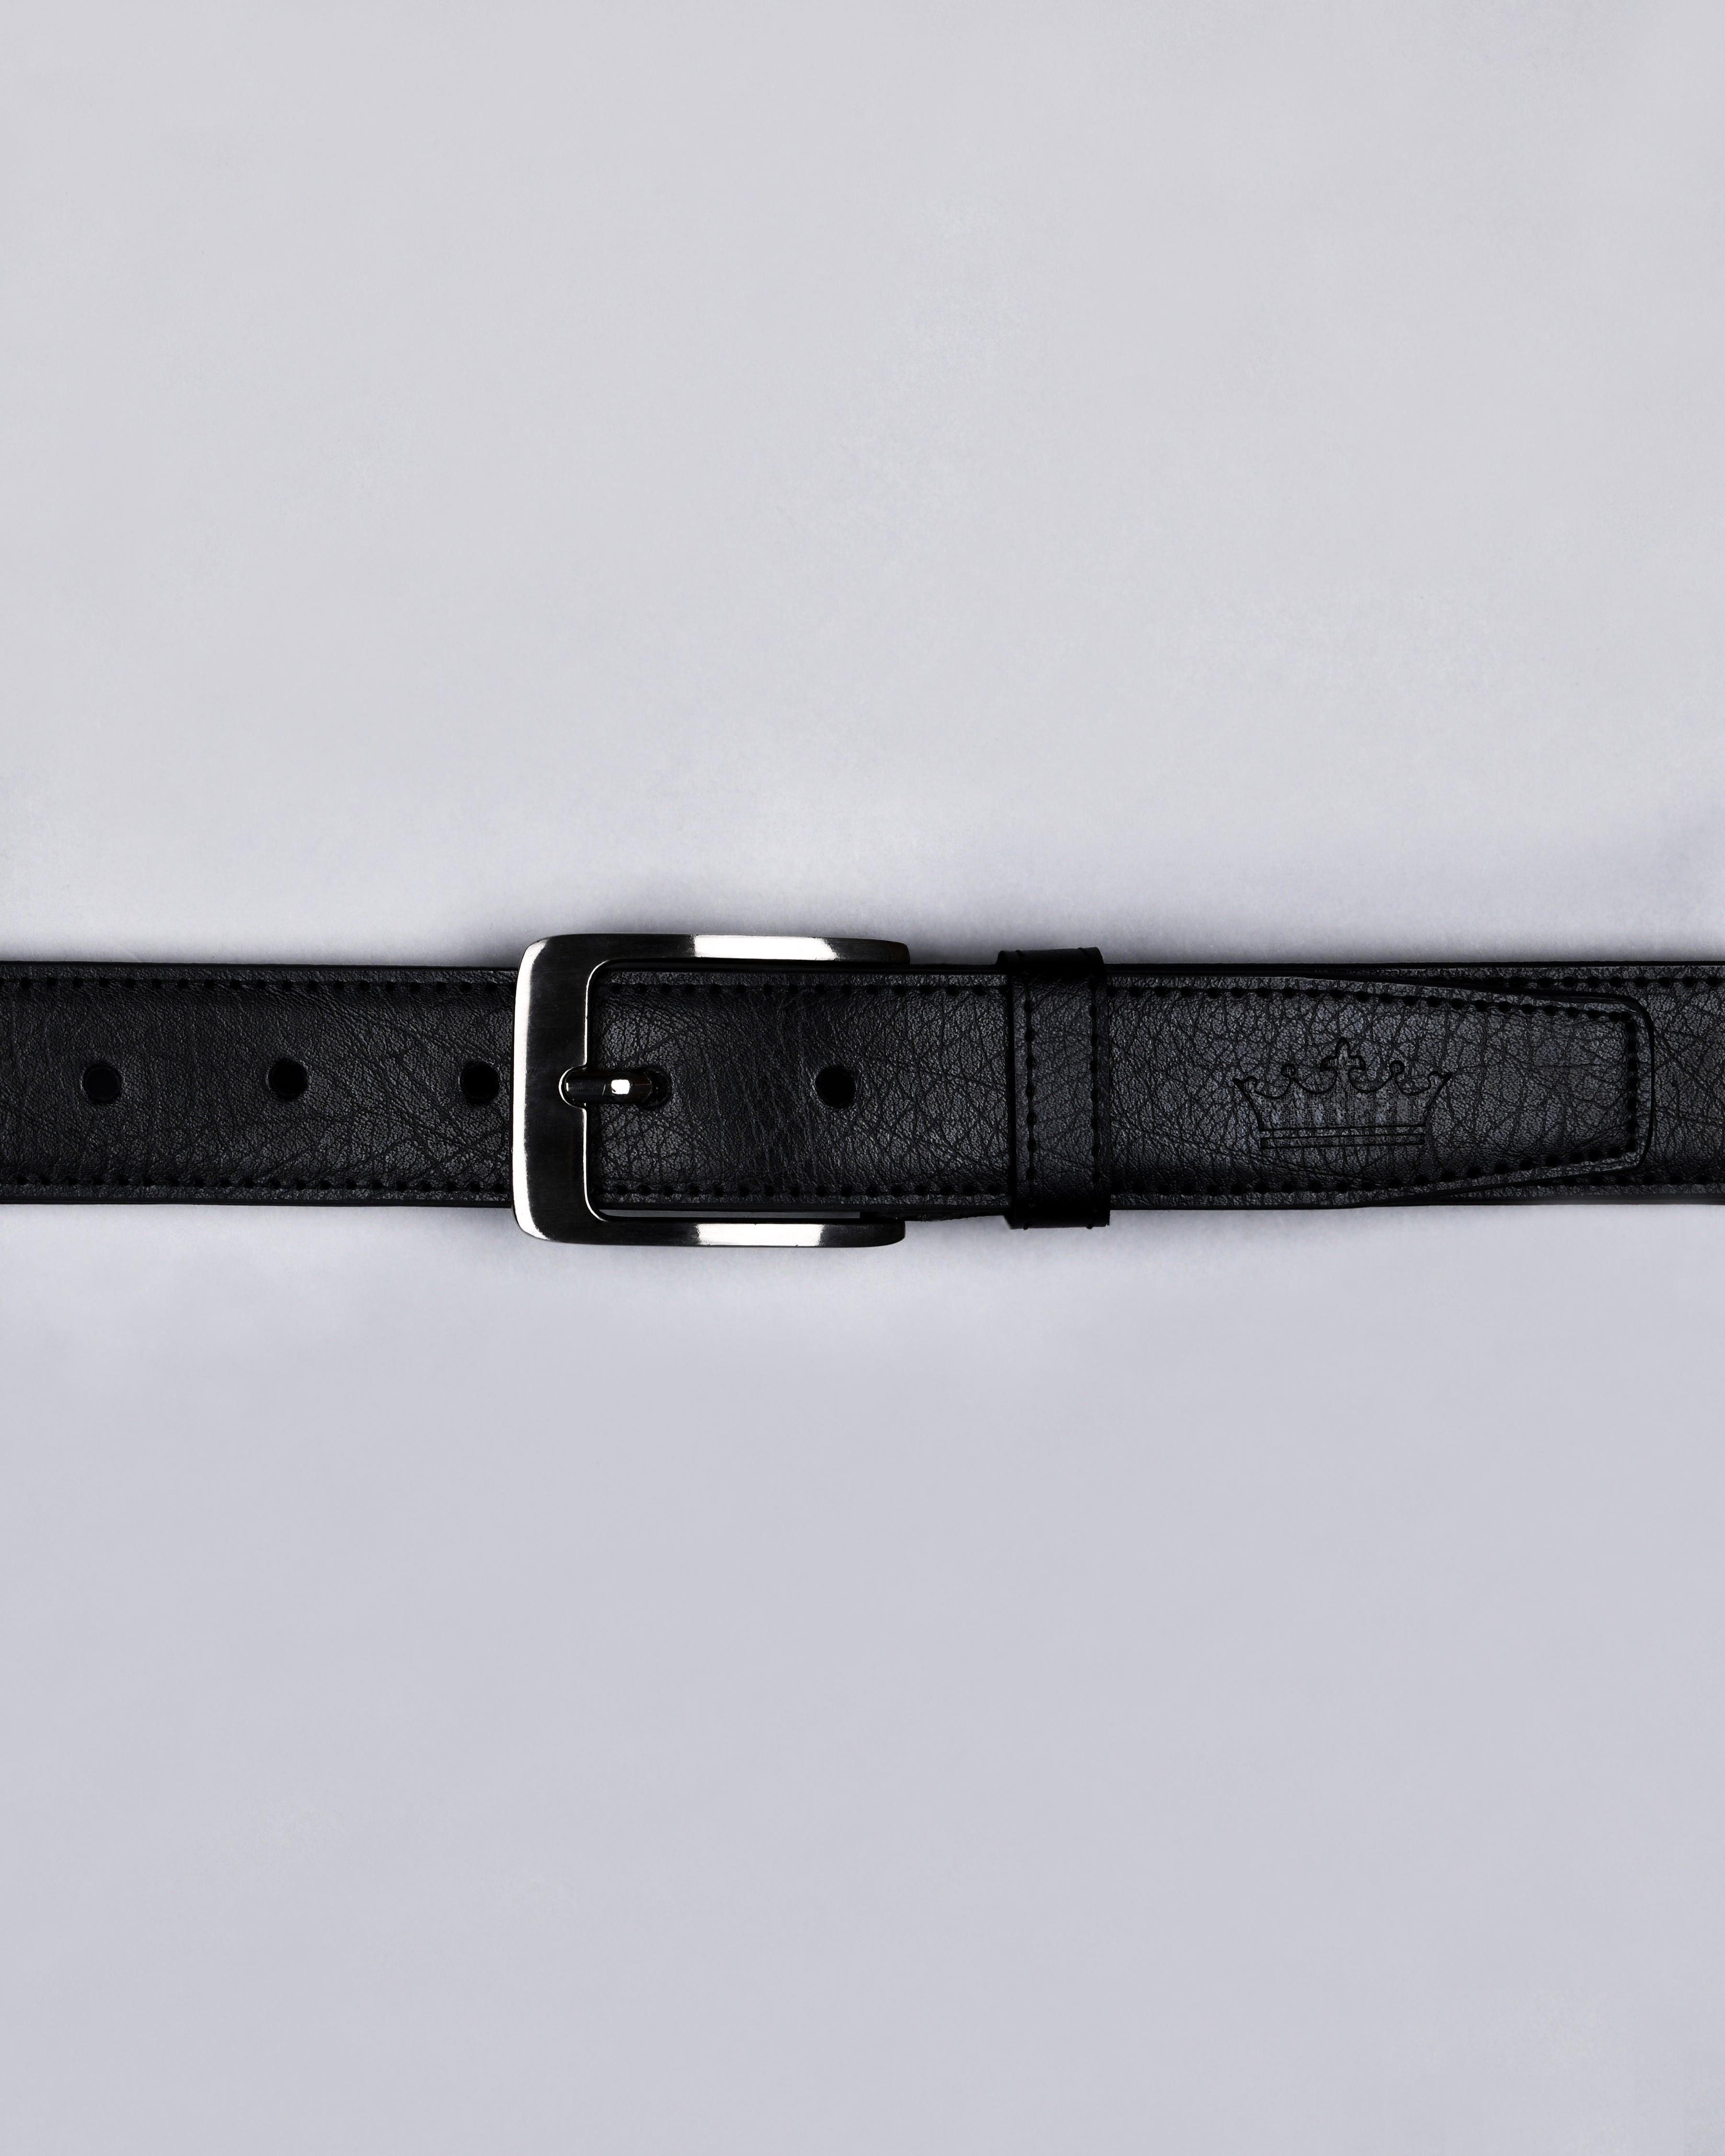 Jade Black Slight Textured Vegan Leather Handcrafted Belt BT15-36, BT15-28, BT15-30, BT15-32, BT15-38, BT15-34